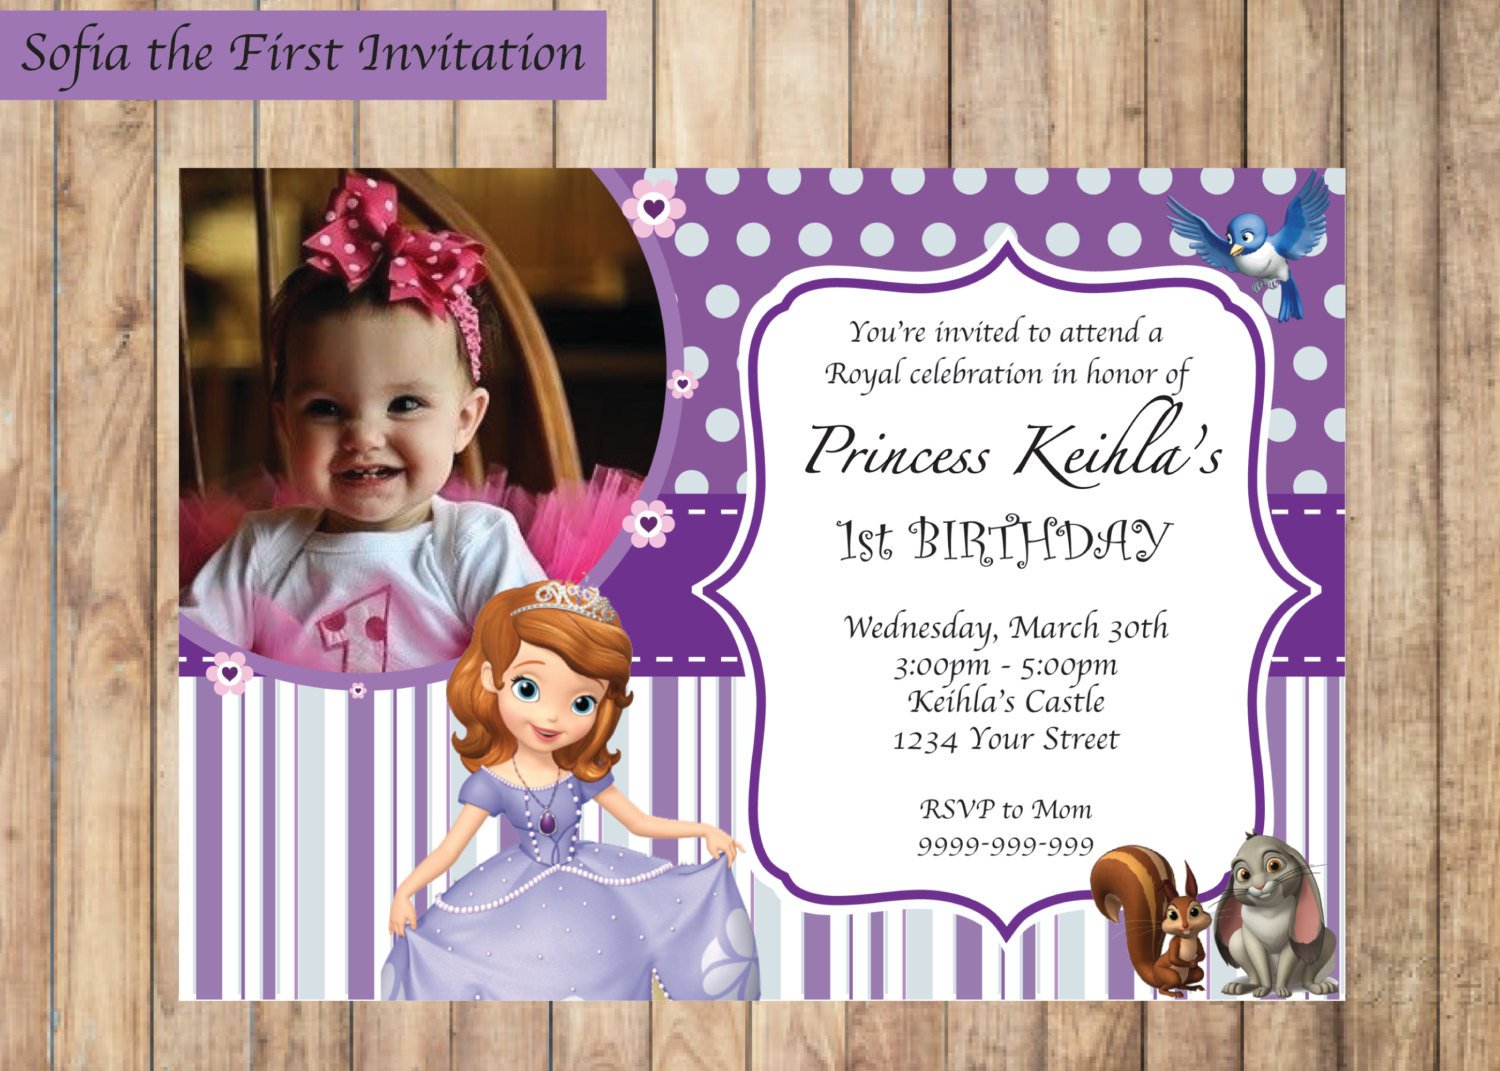 Sofia the First Invitation Printable Birthday Party Invite